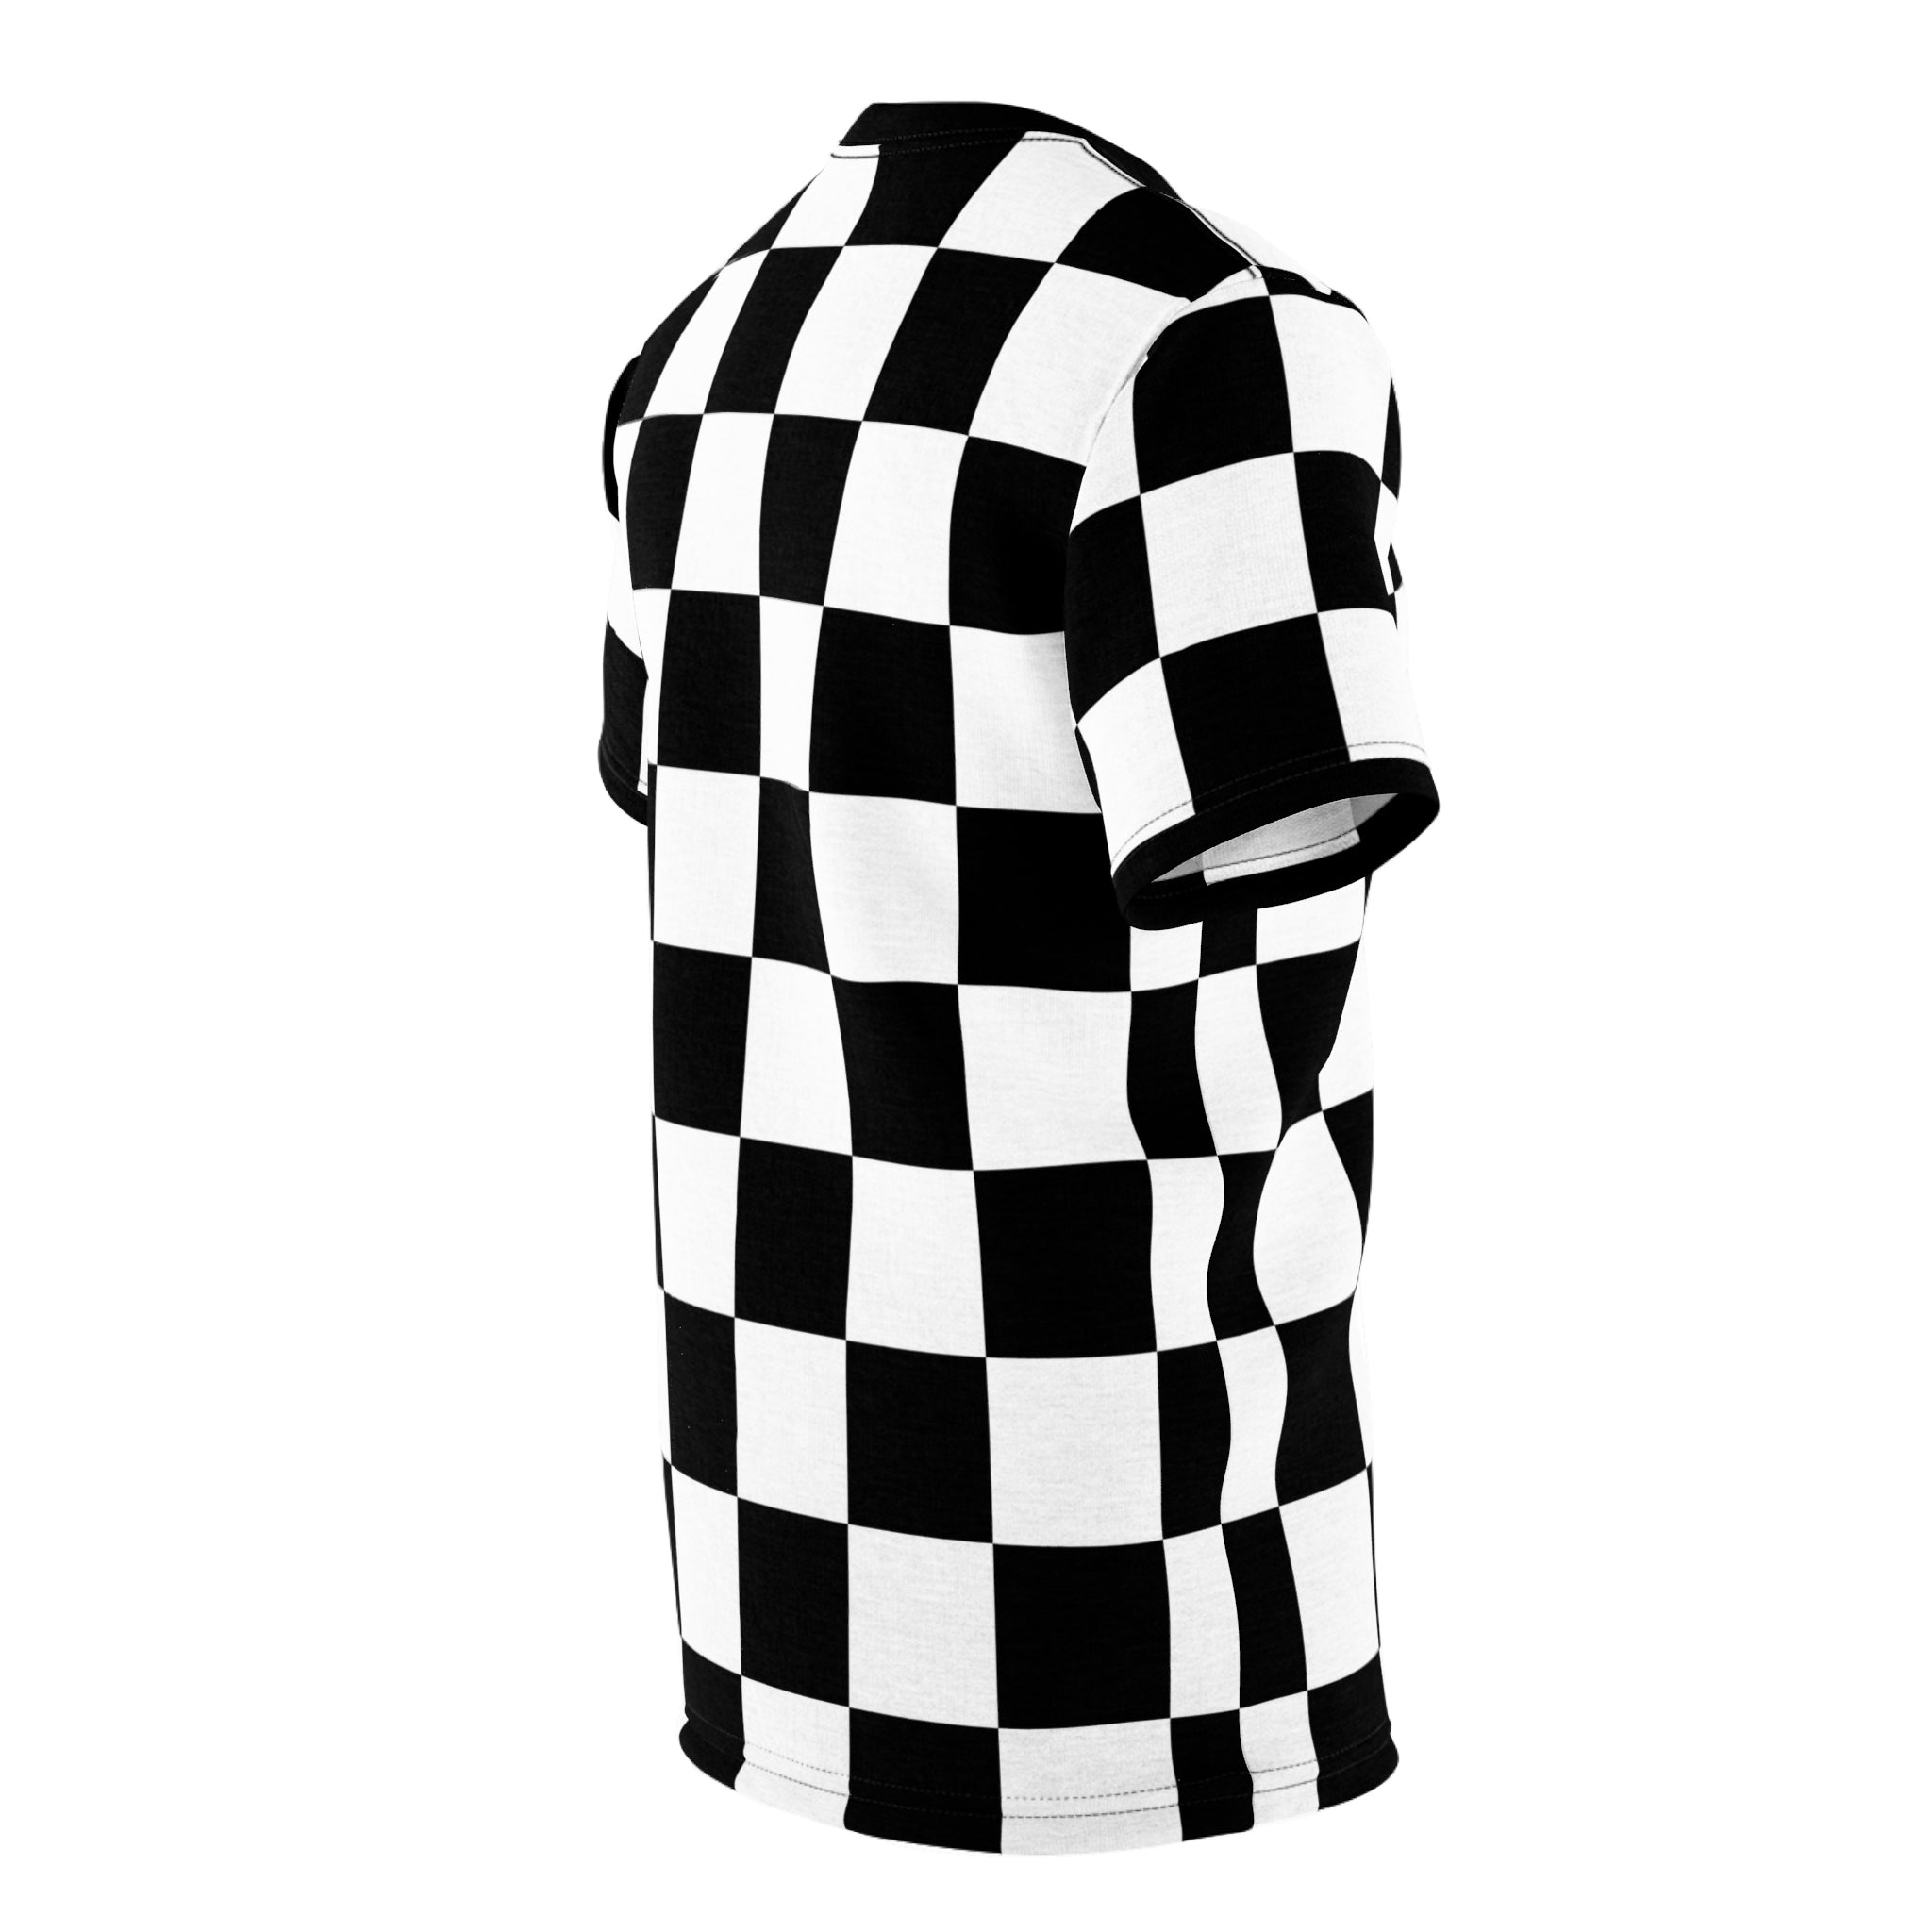 Black & White Checkerboard Shirt